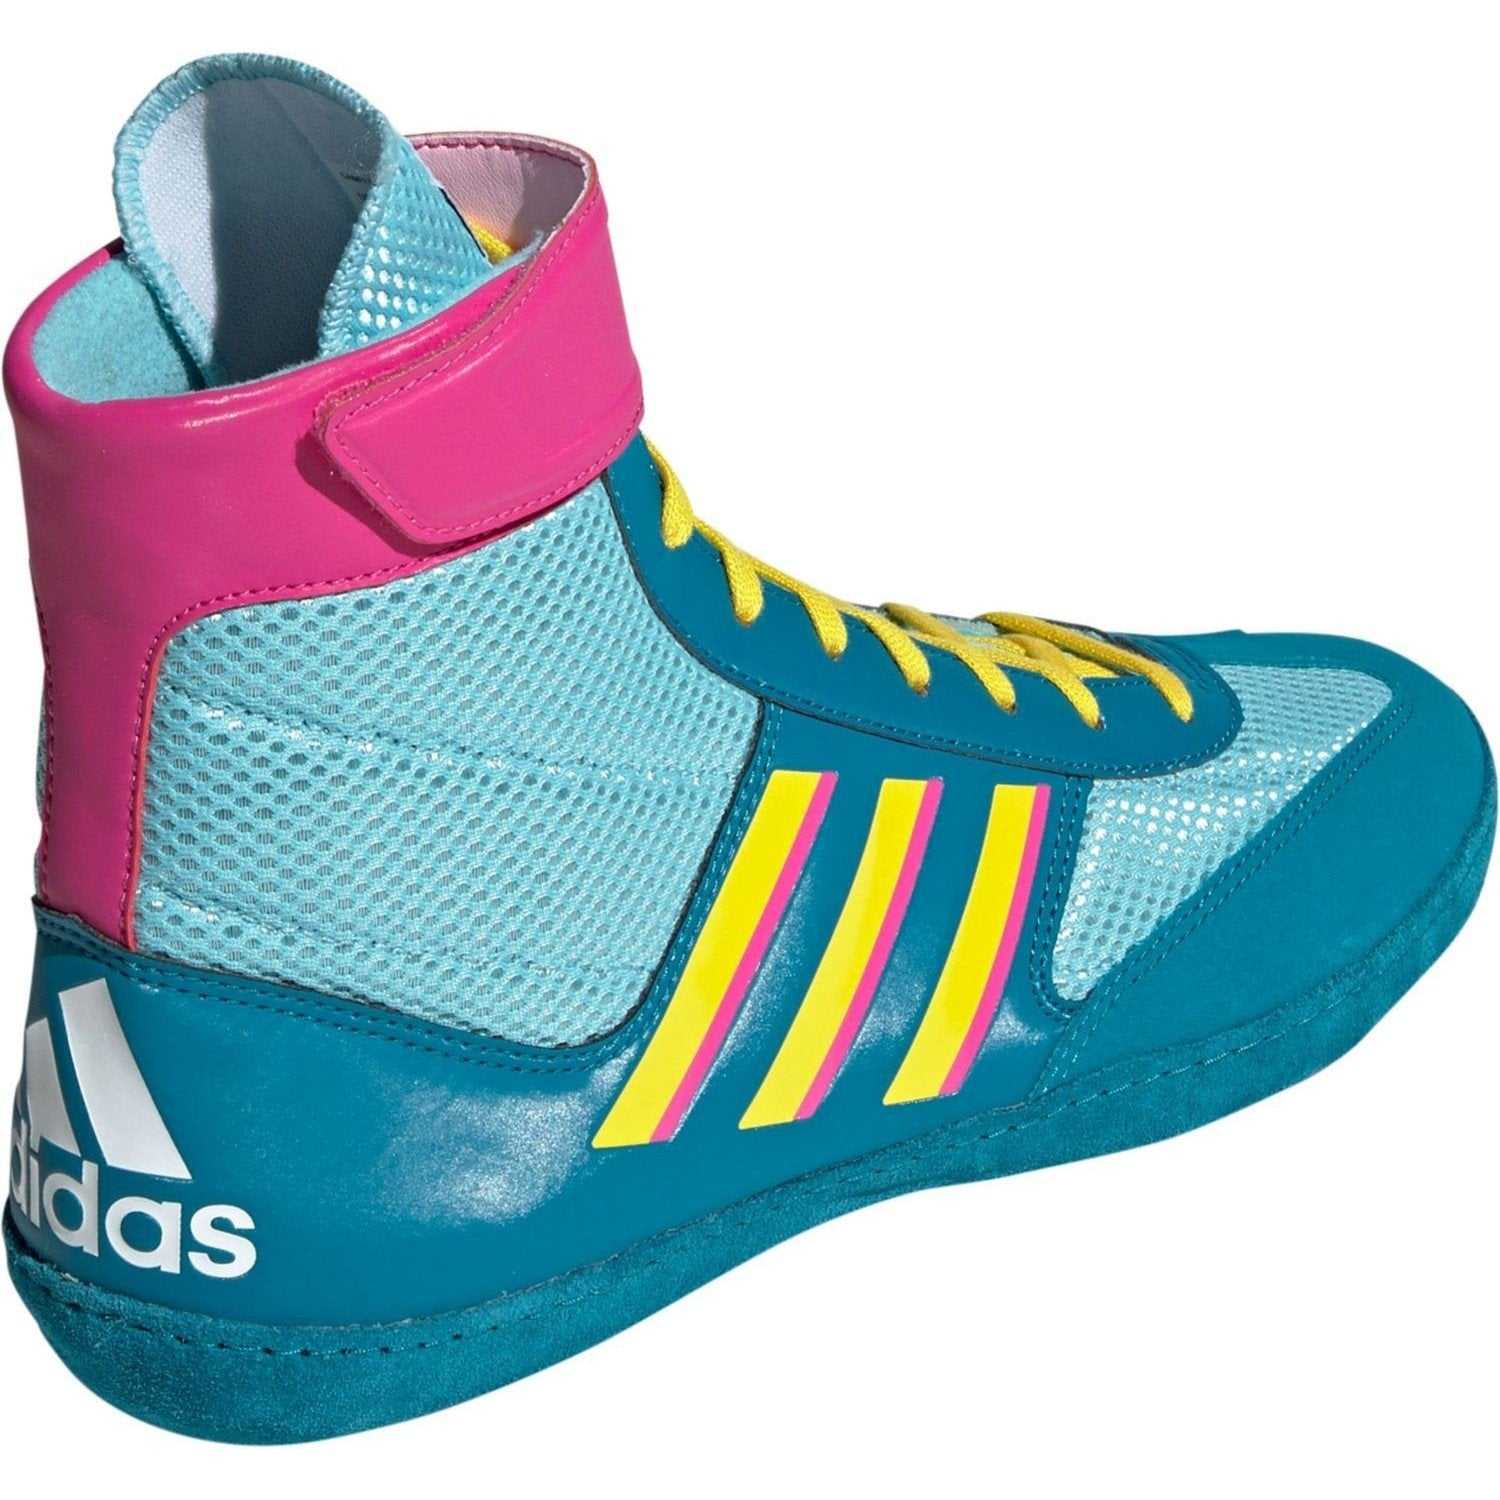 Adidas 224 Speed 5 Wrestling Shoes Aqua Teal